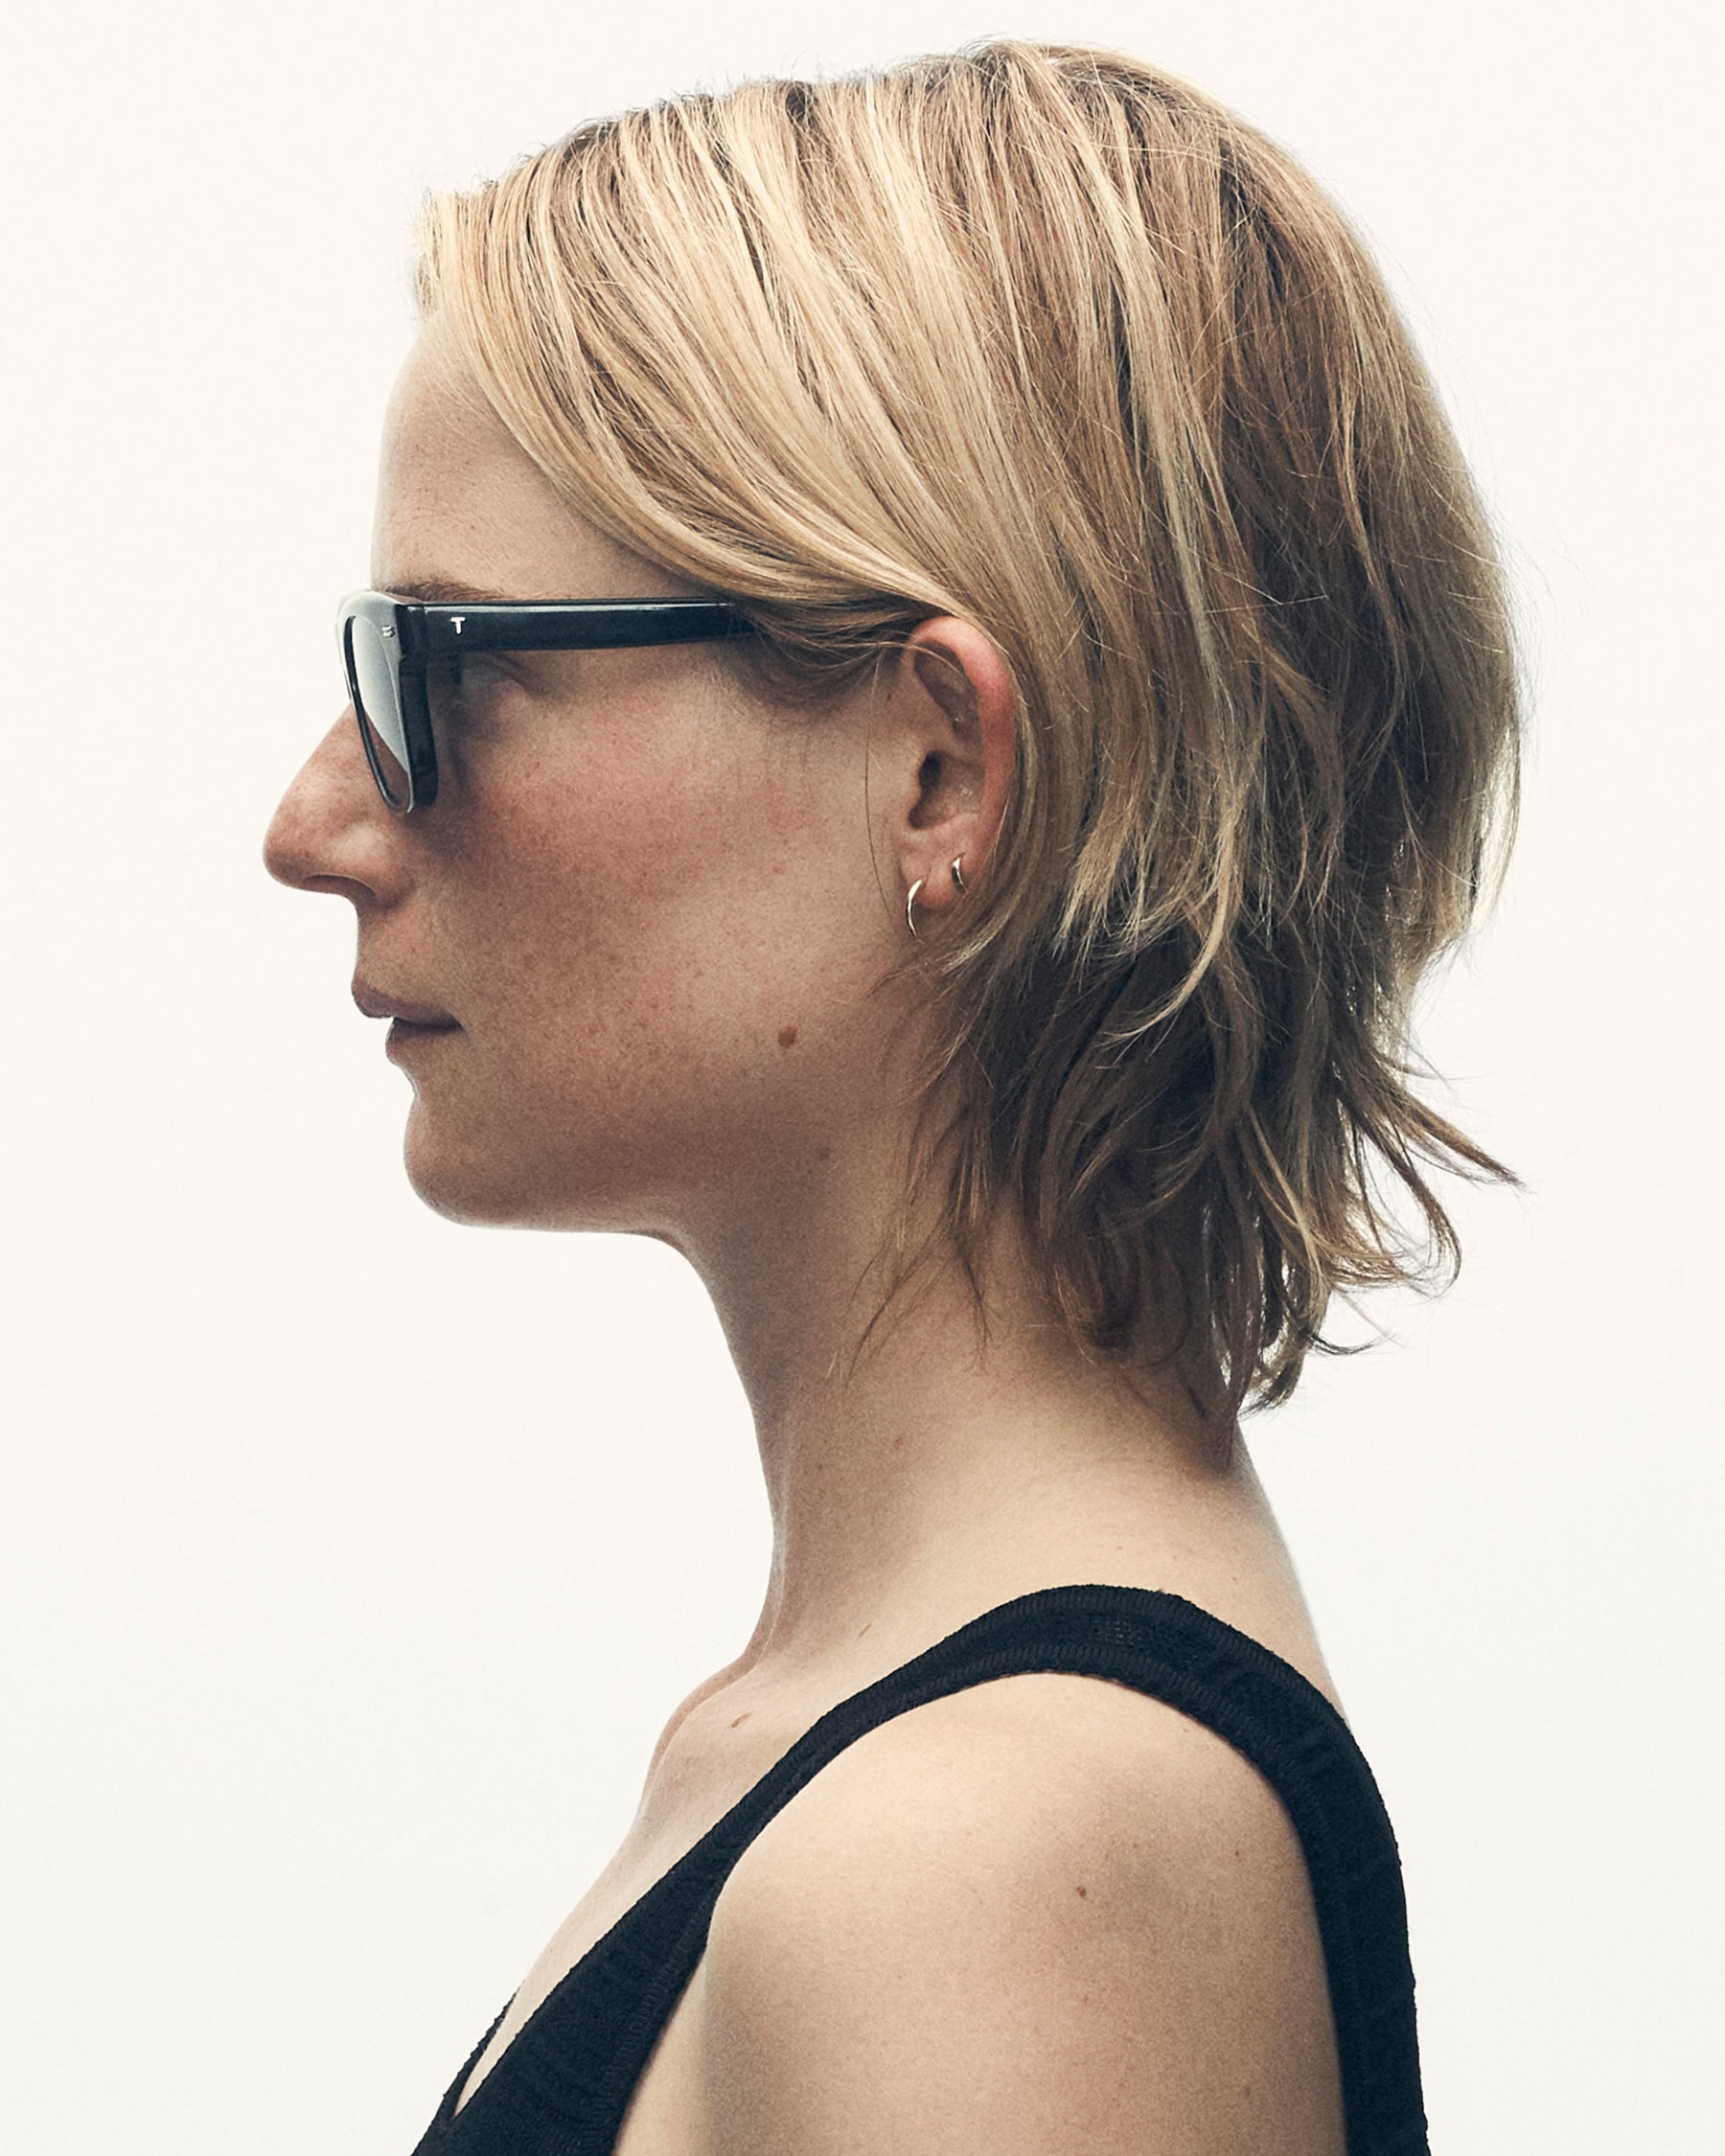 model wearing sunglasses, facing leftward